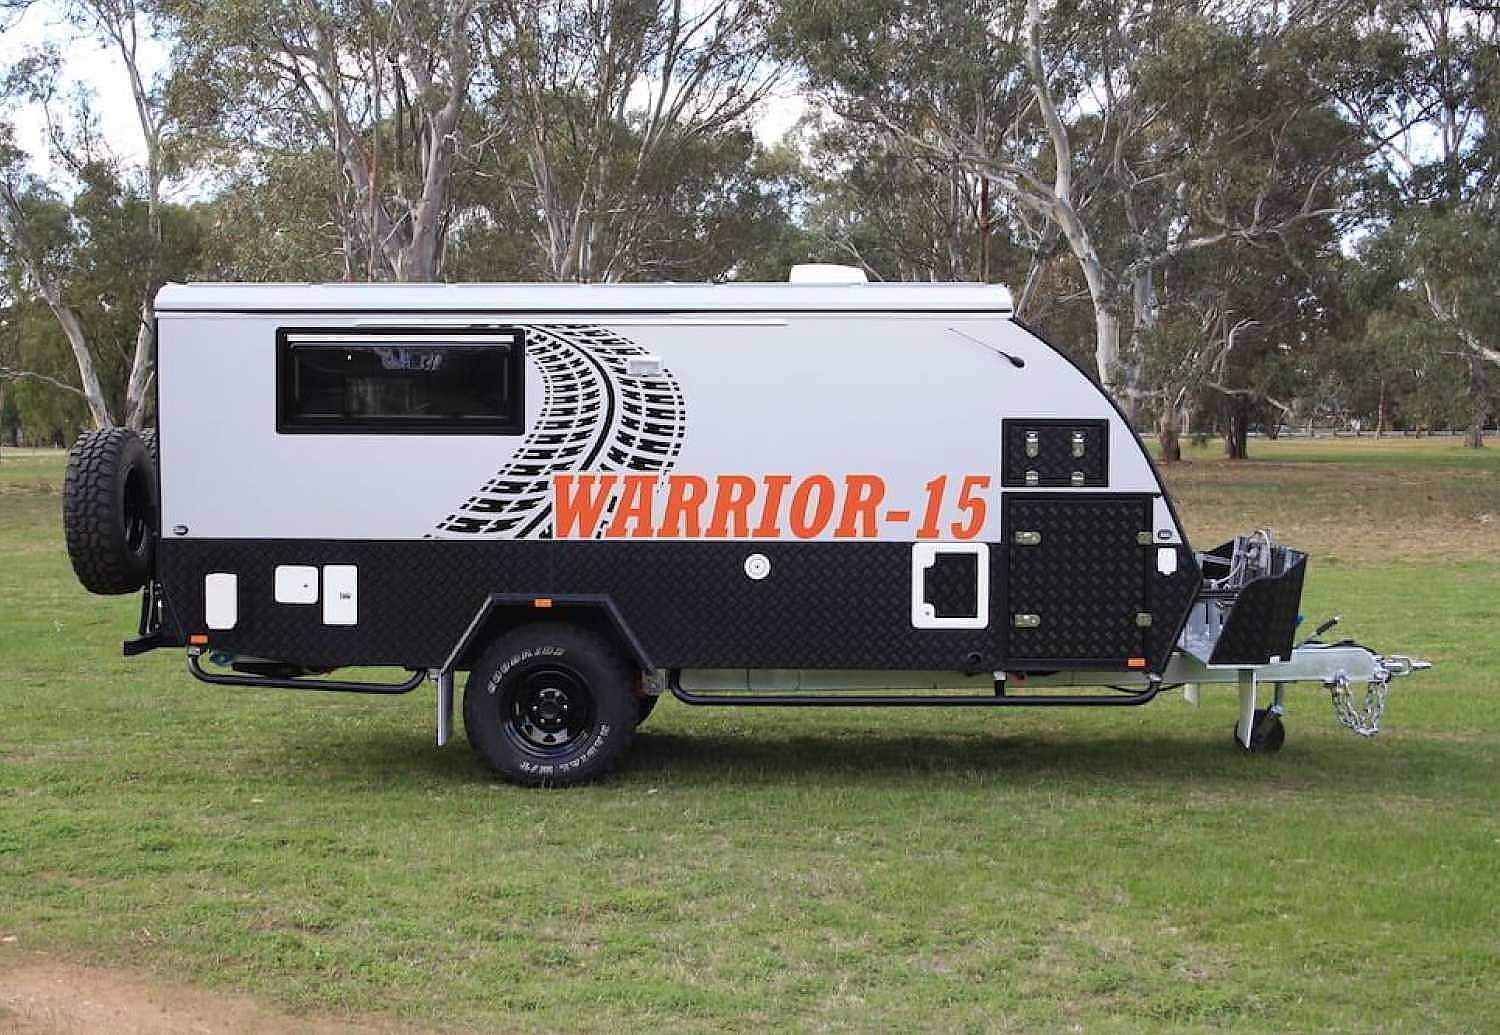 Warrior-15 Off Road Hybrid Caravan